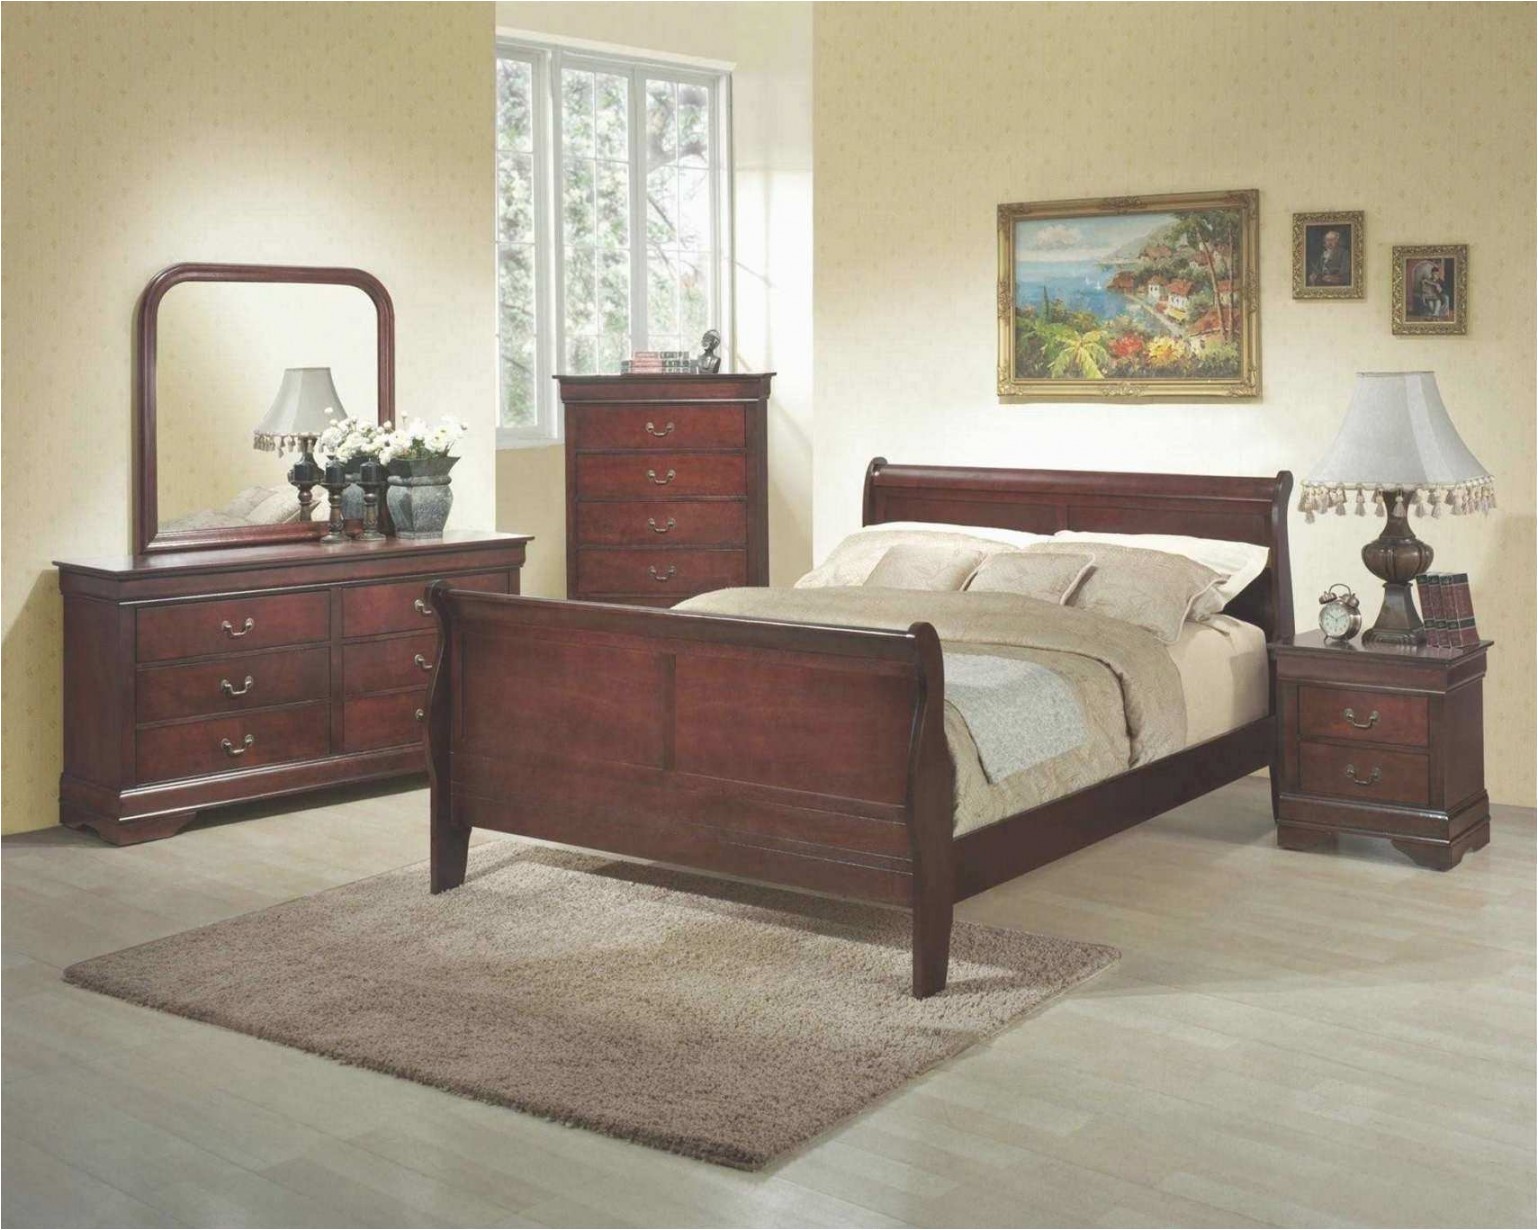 thomasville queen anne bedroom furniture